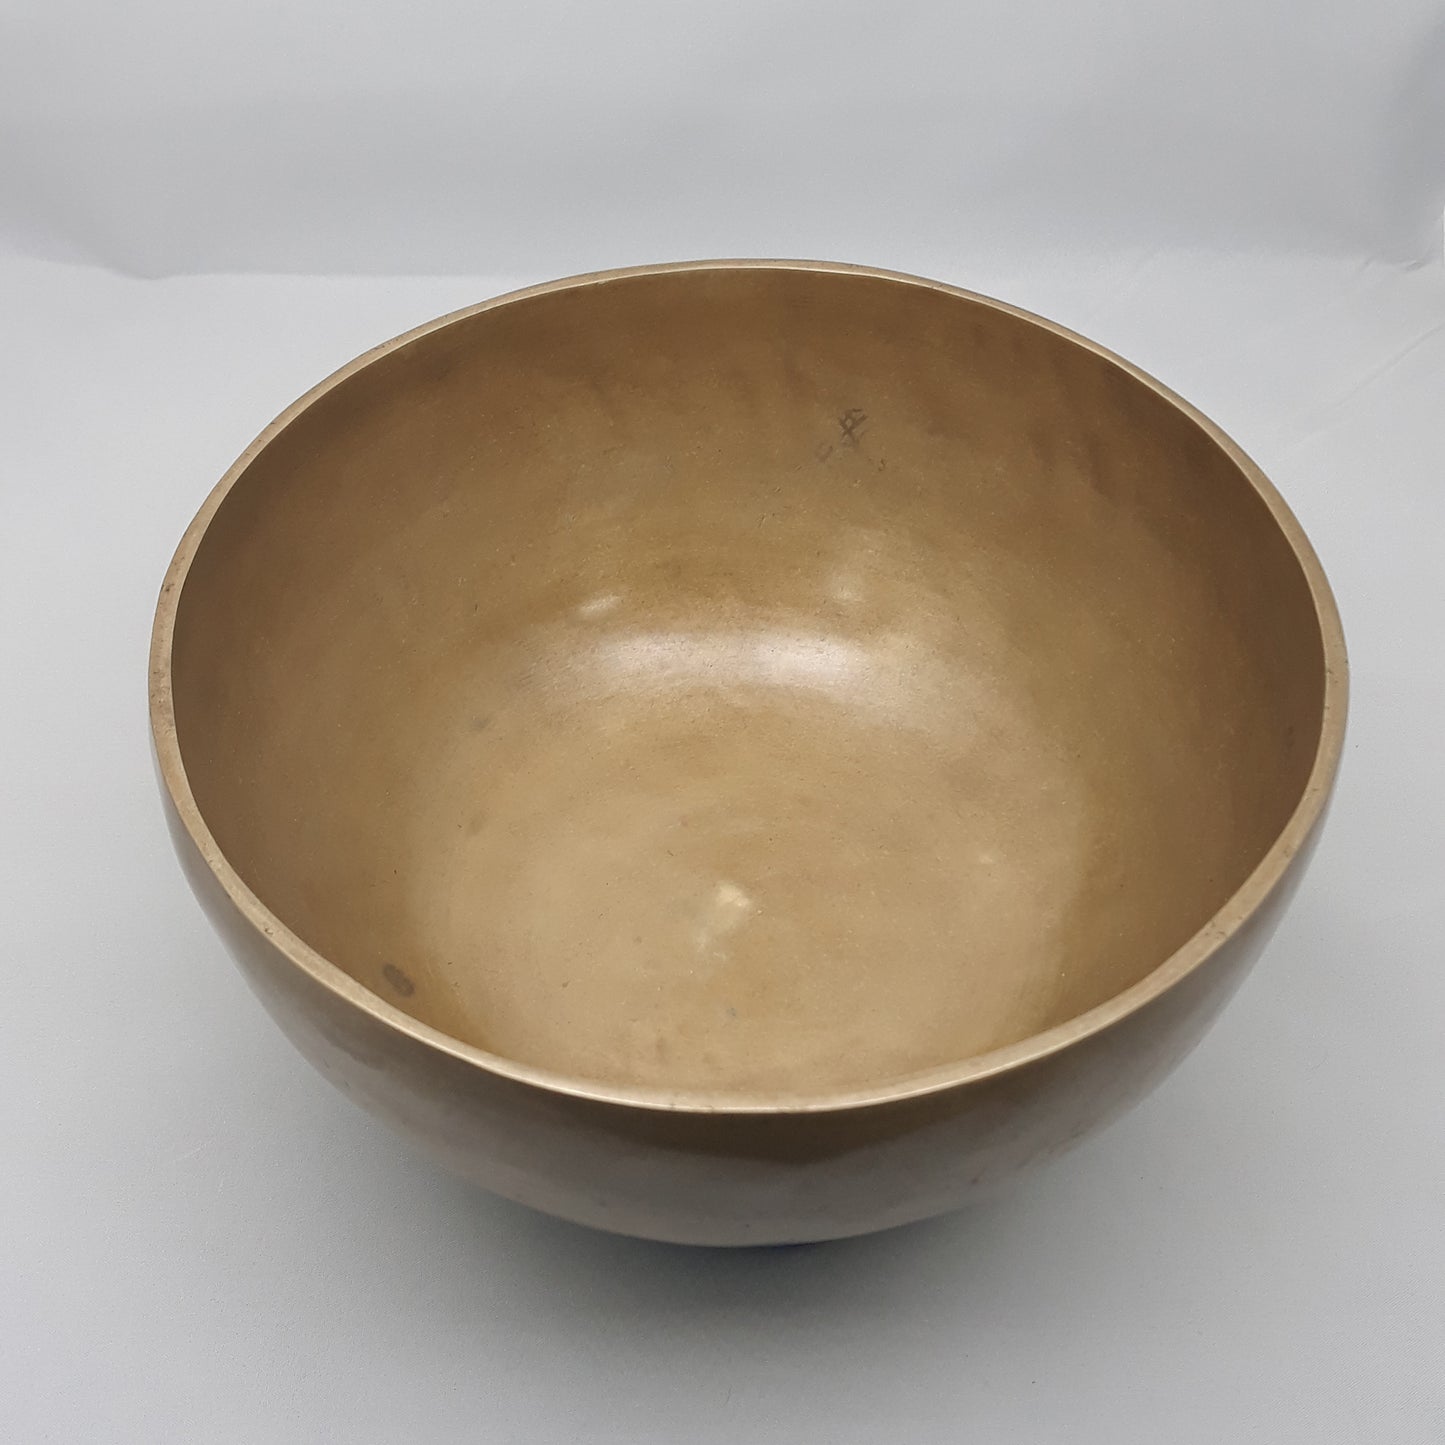 Unengraved Singing Bowl:   - X-Small - 4.5” diameter